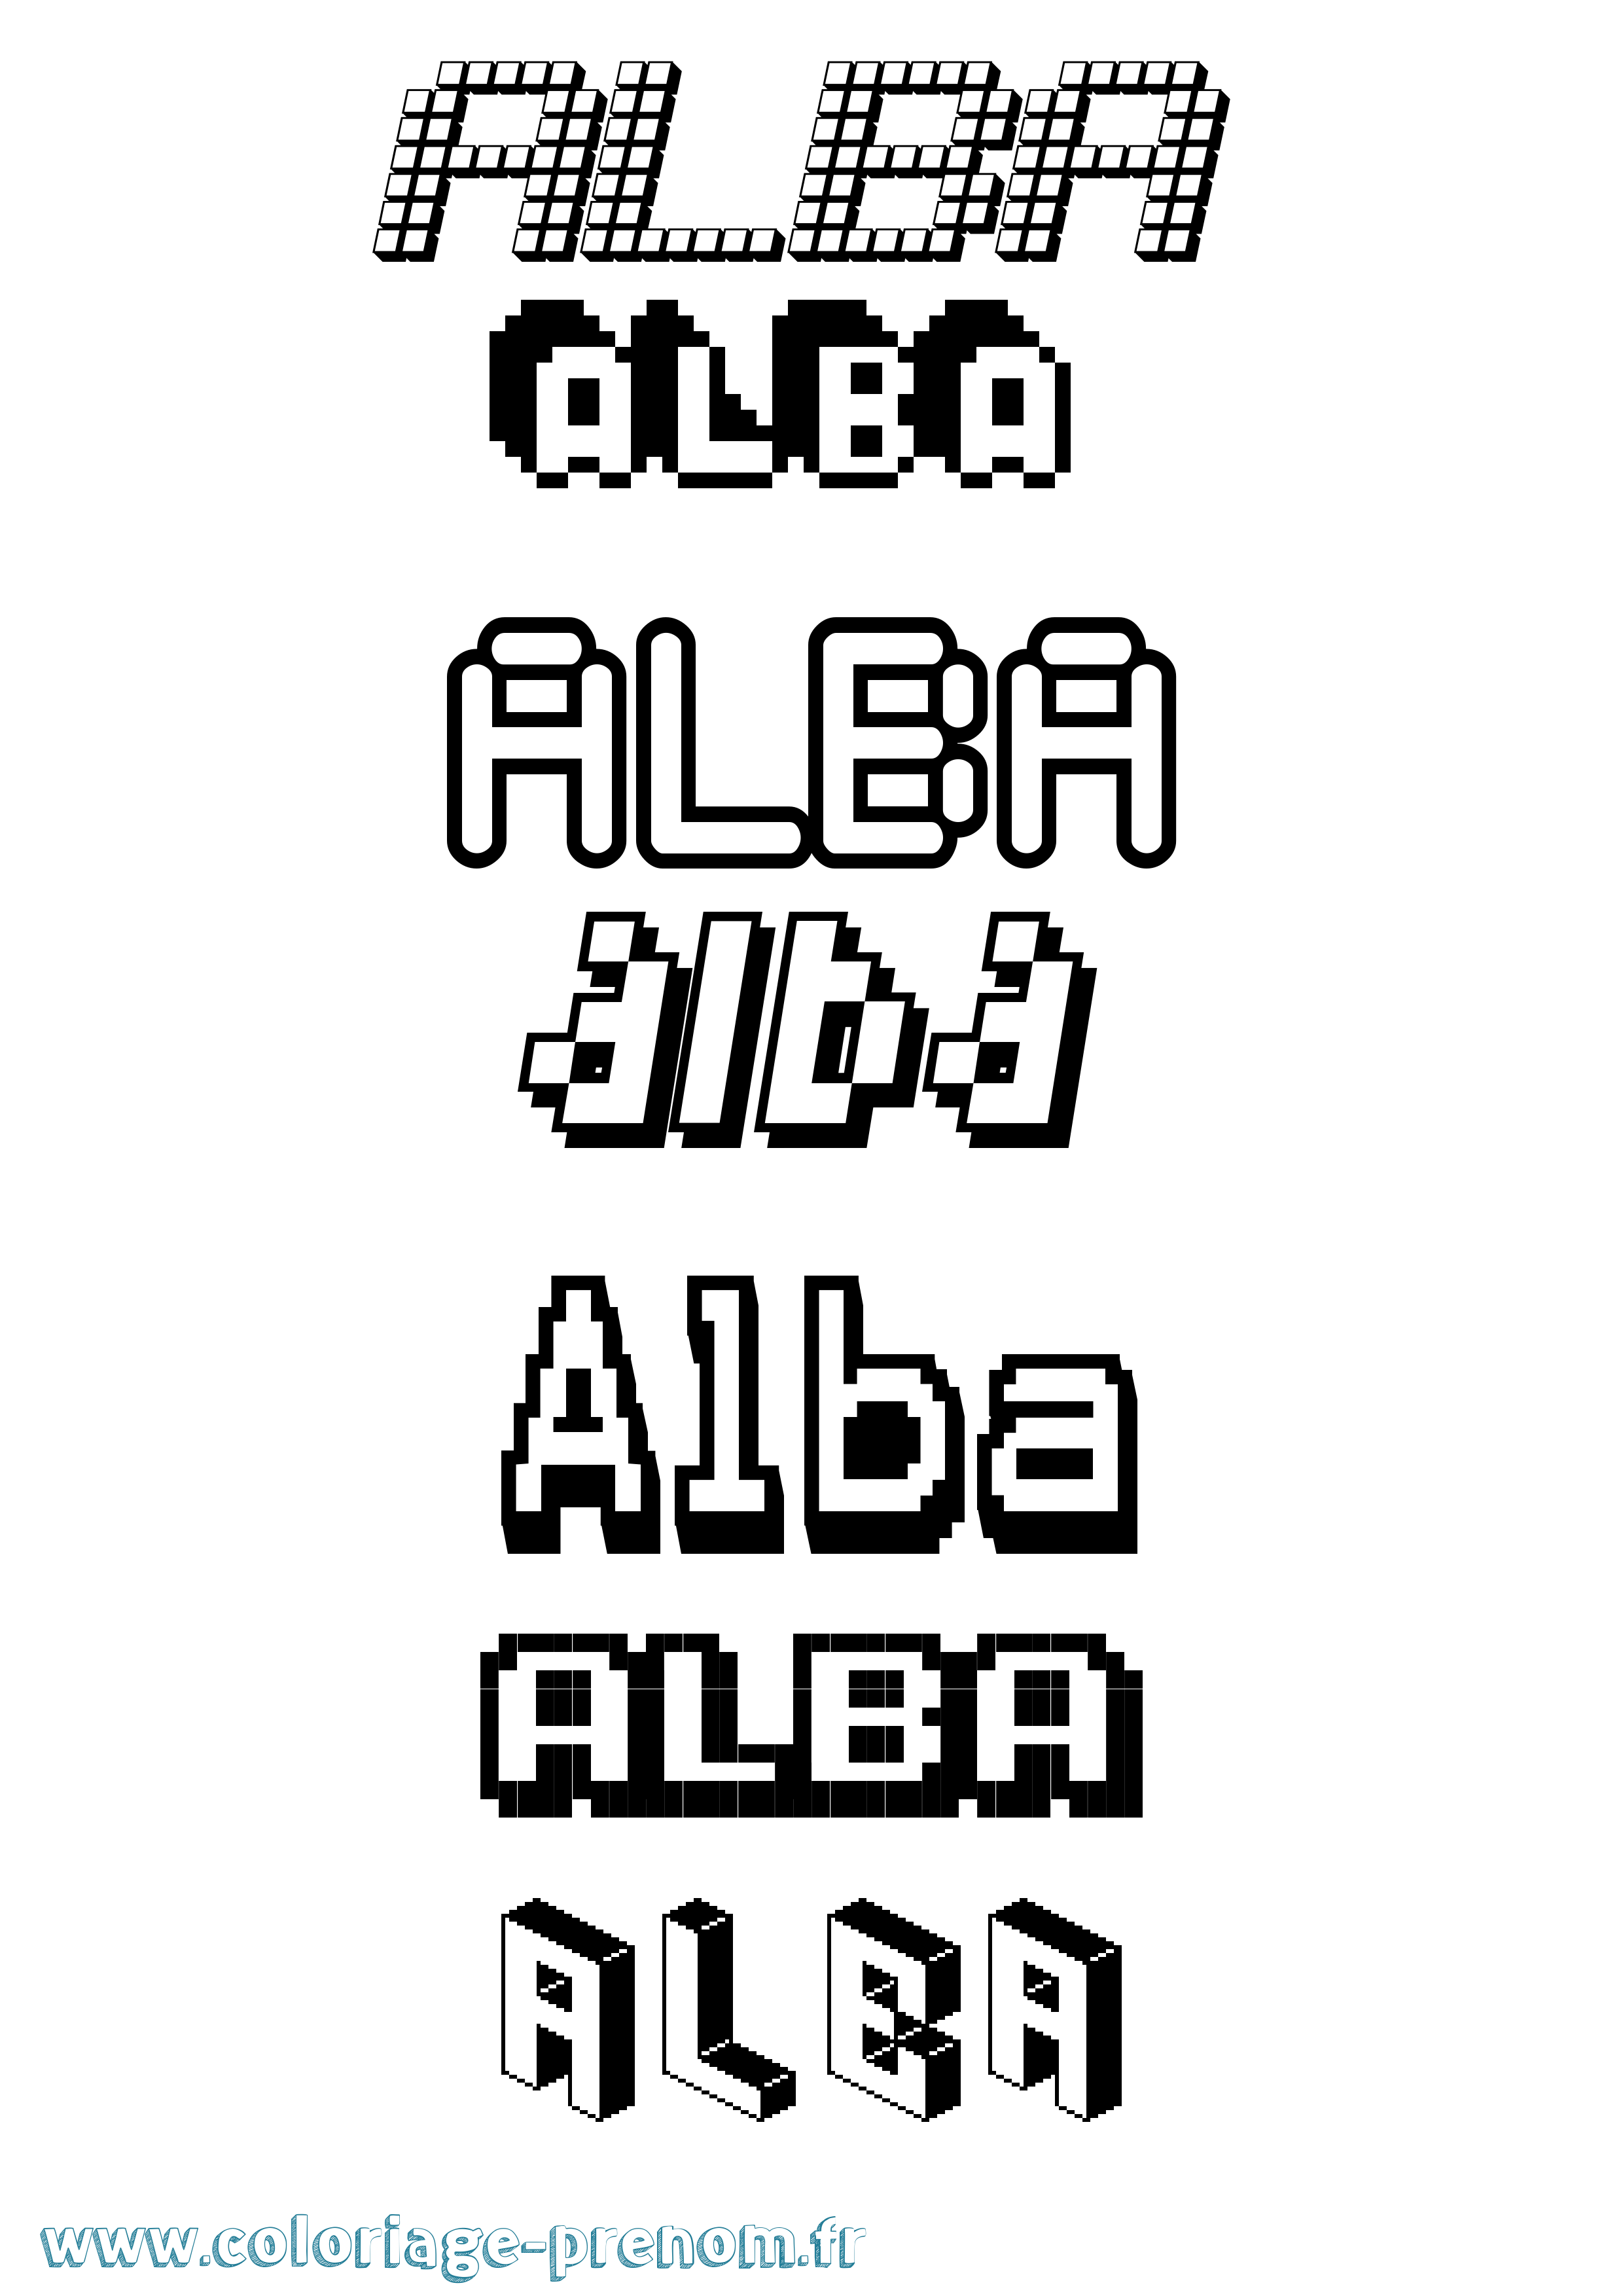 Coloriage prénom Alba Pixel